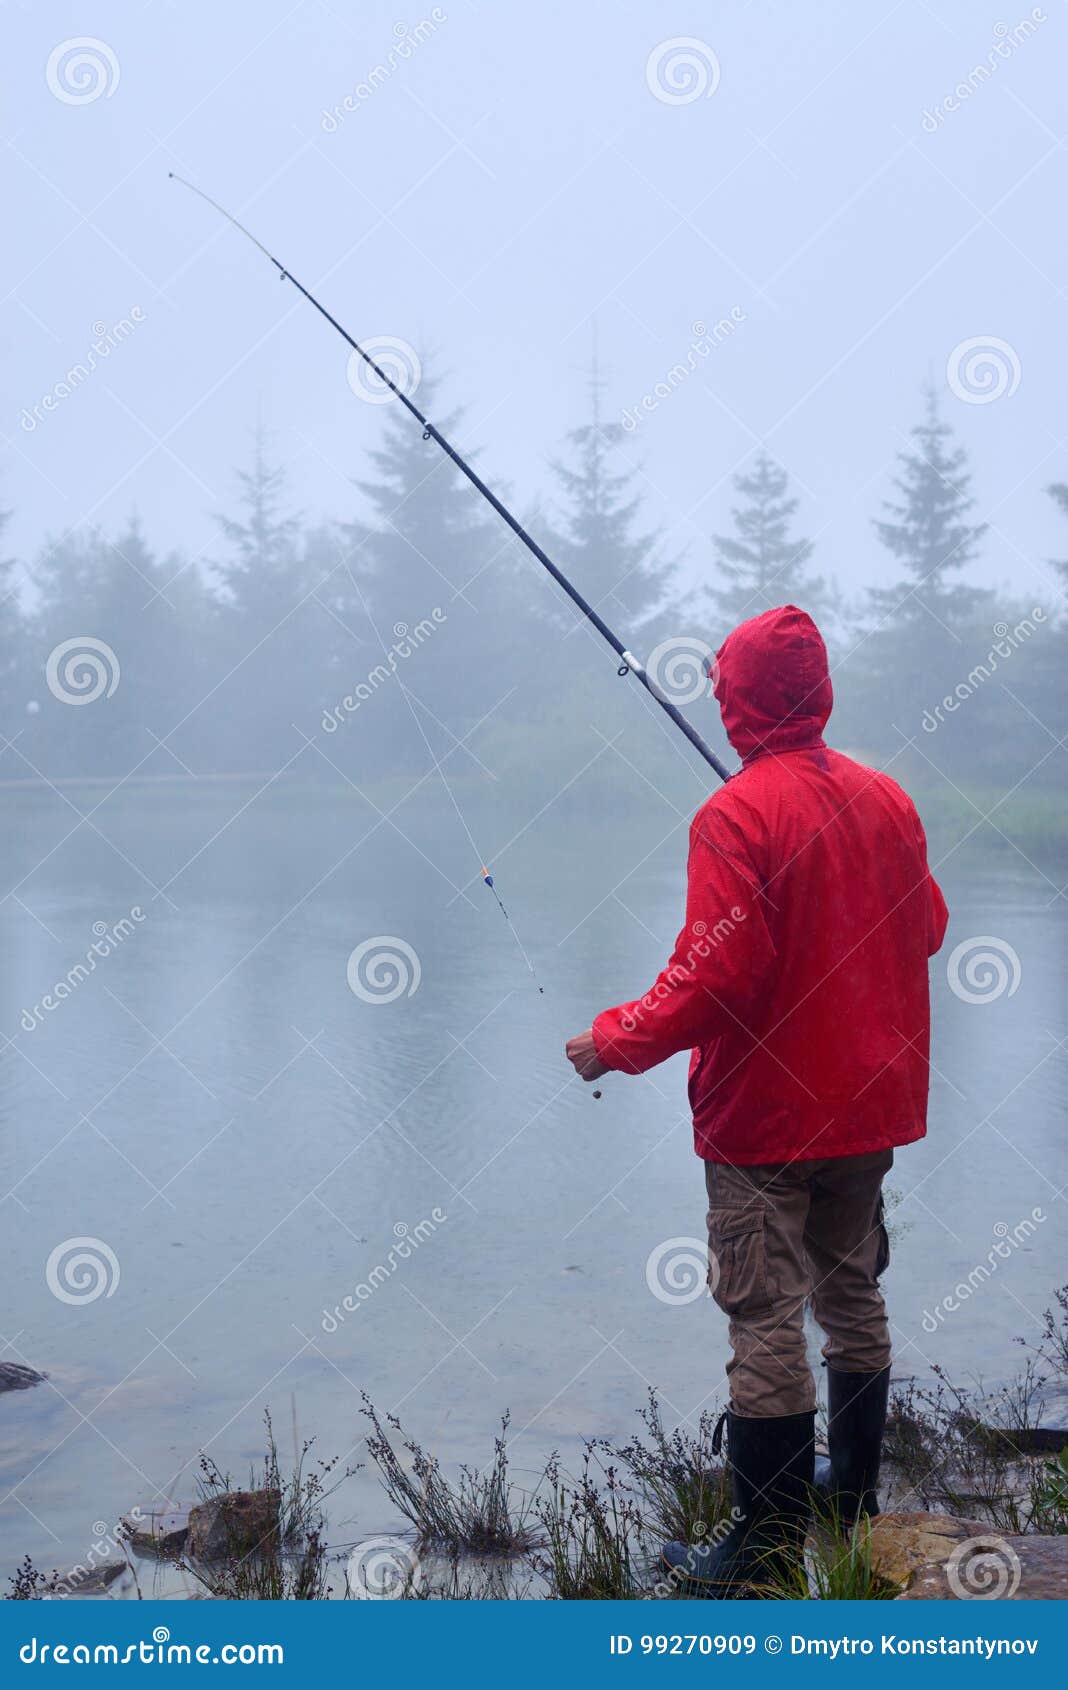 https://thumbs.dreamstime.com/z/man-waterproof-jacket-fishing-rainy-weather-side-view-man-waterproof-jacket-fishing-rainy-weather-99270909.jpg